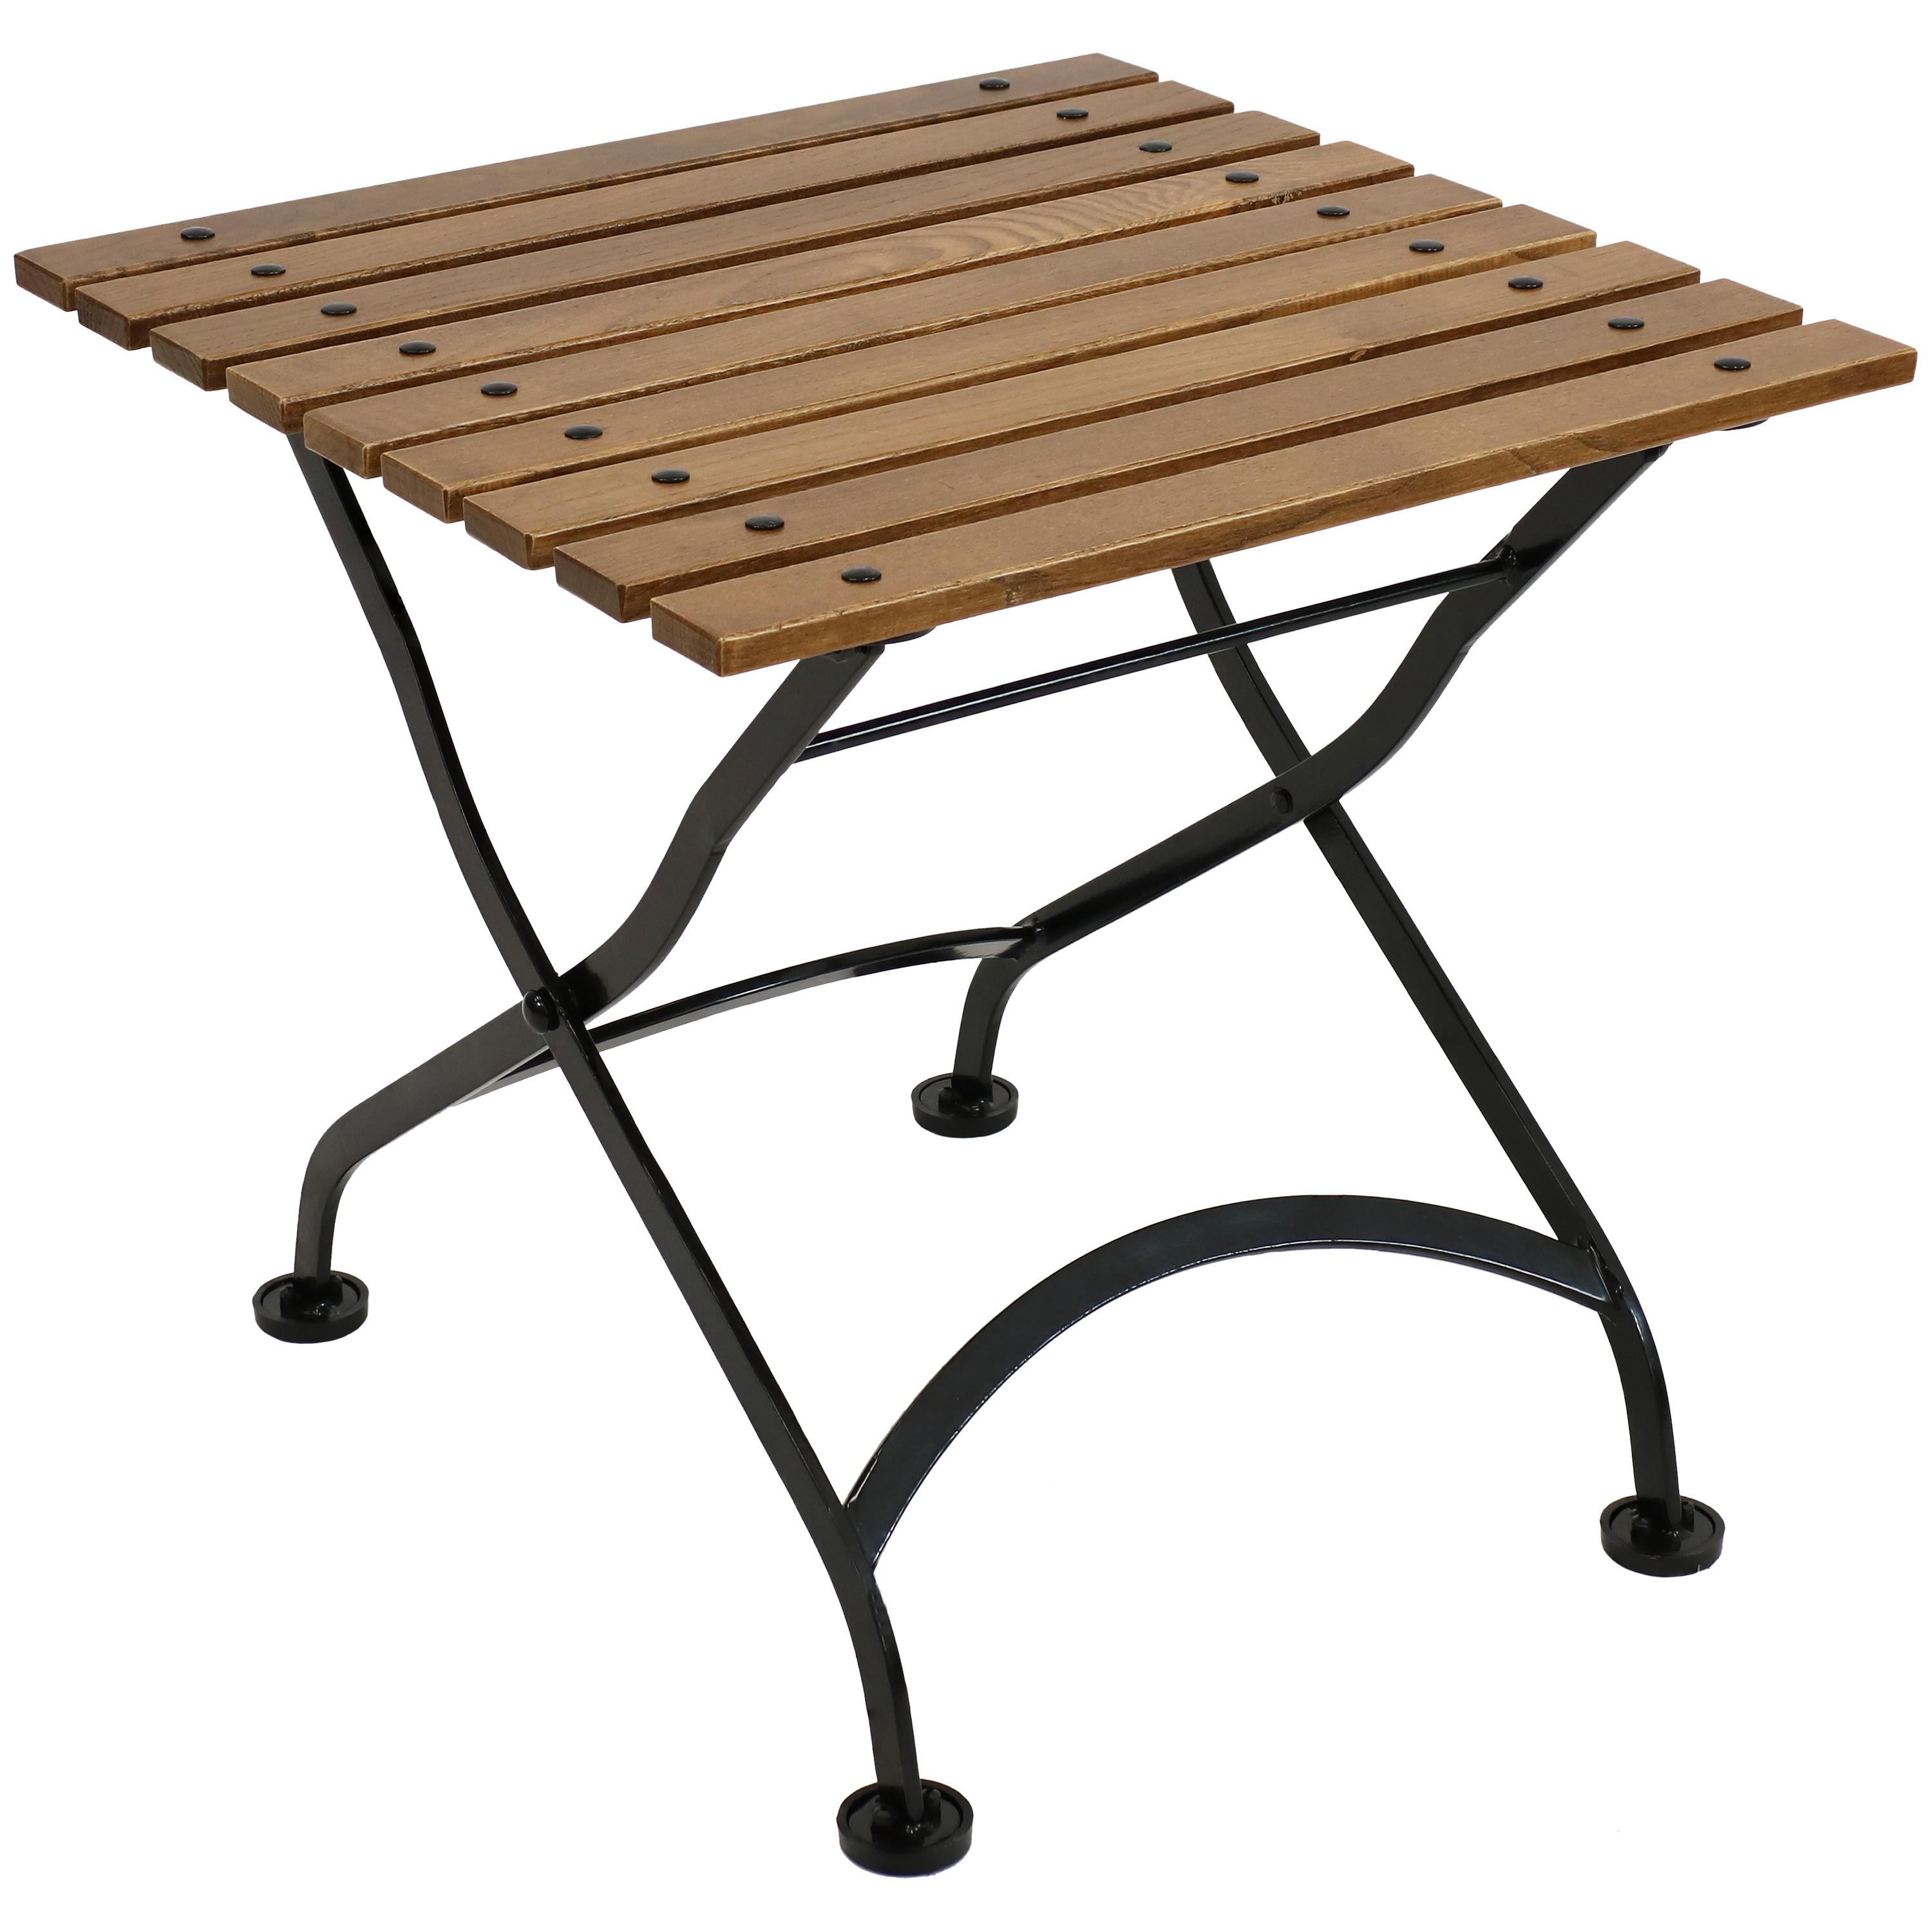 Sunnydaze European Chestnut Wood Folding Square Side Table - 20-Inch